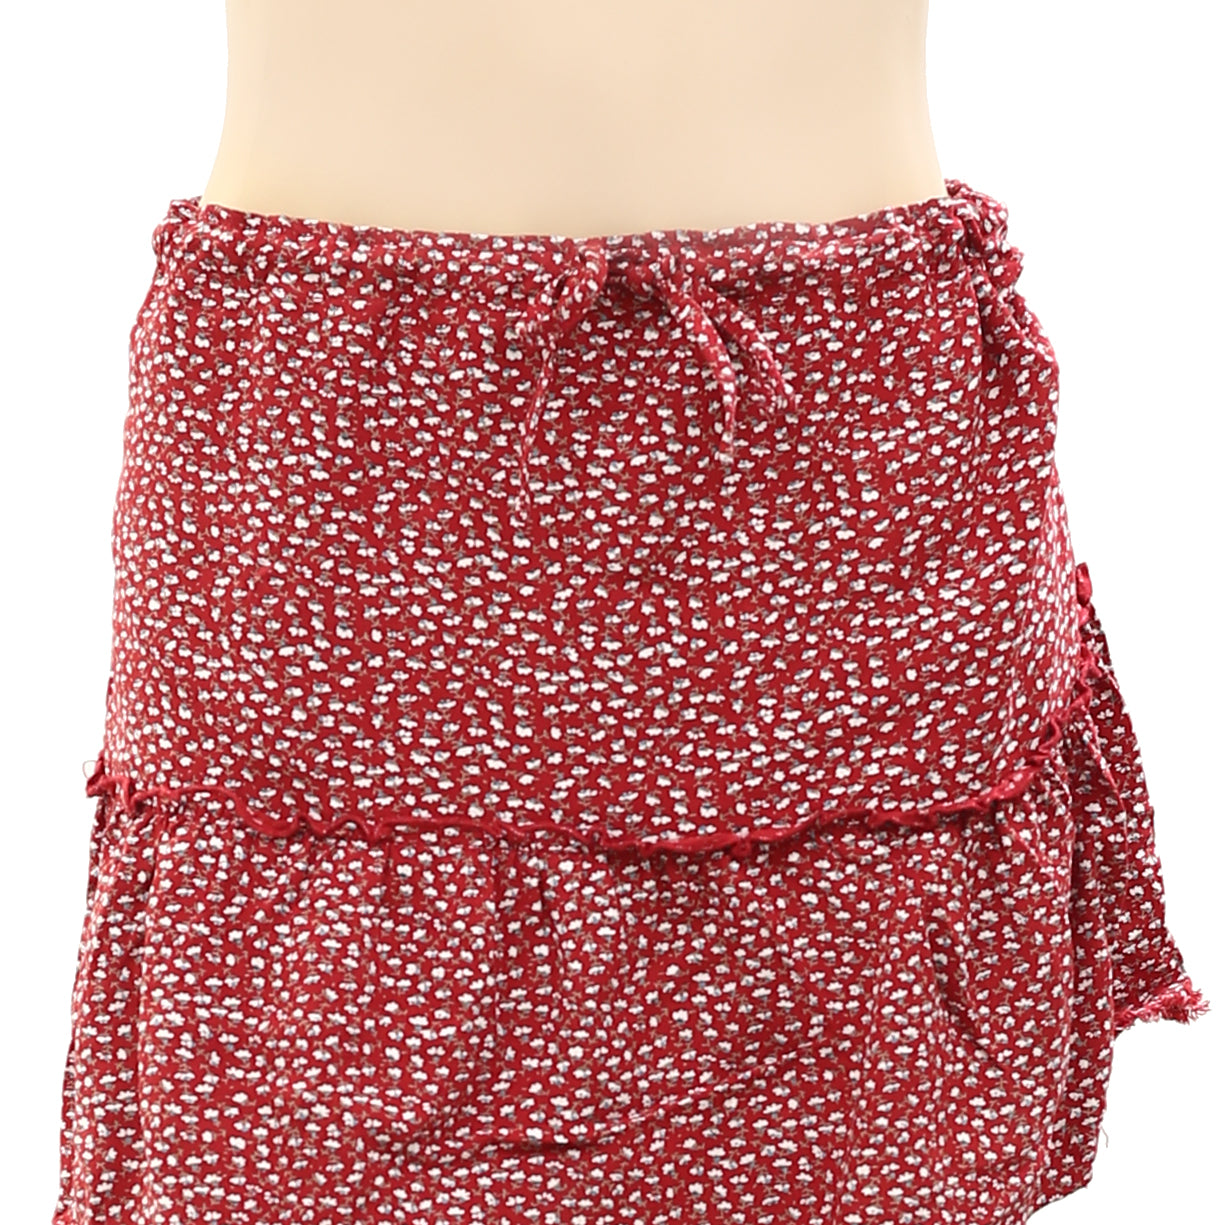 Brandy Melvile Kenzo Mini Skirt